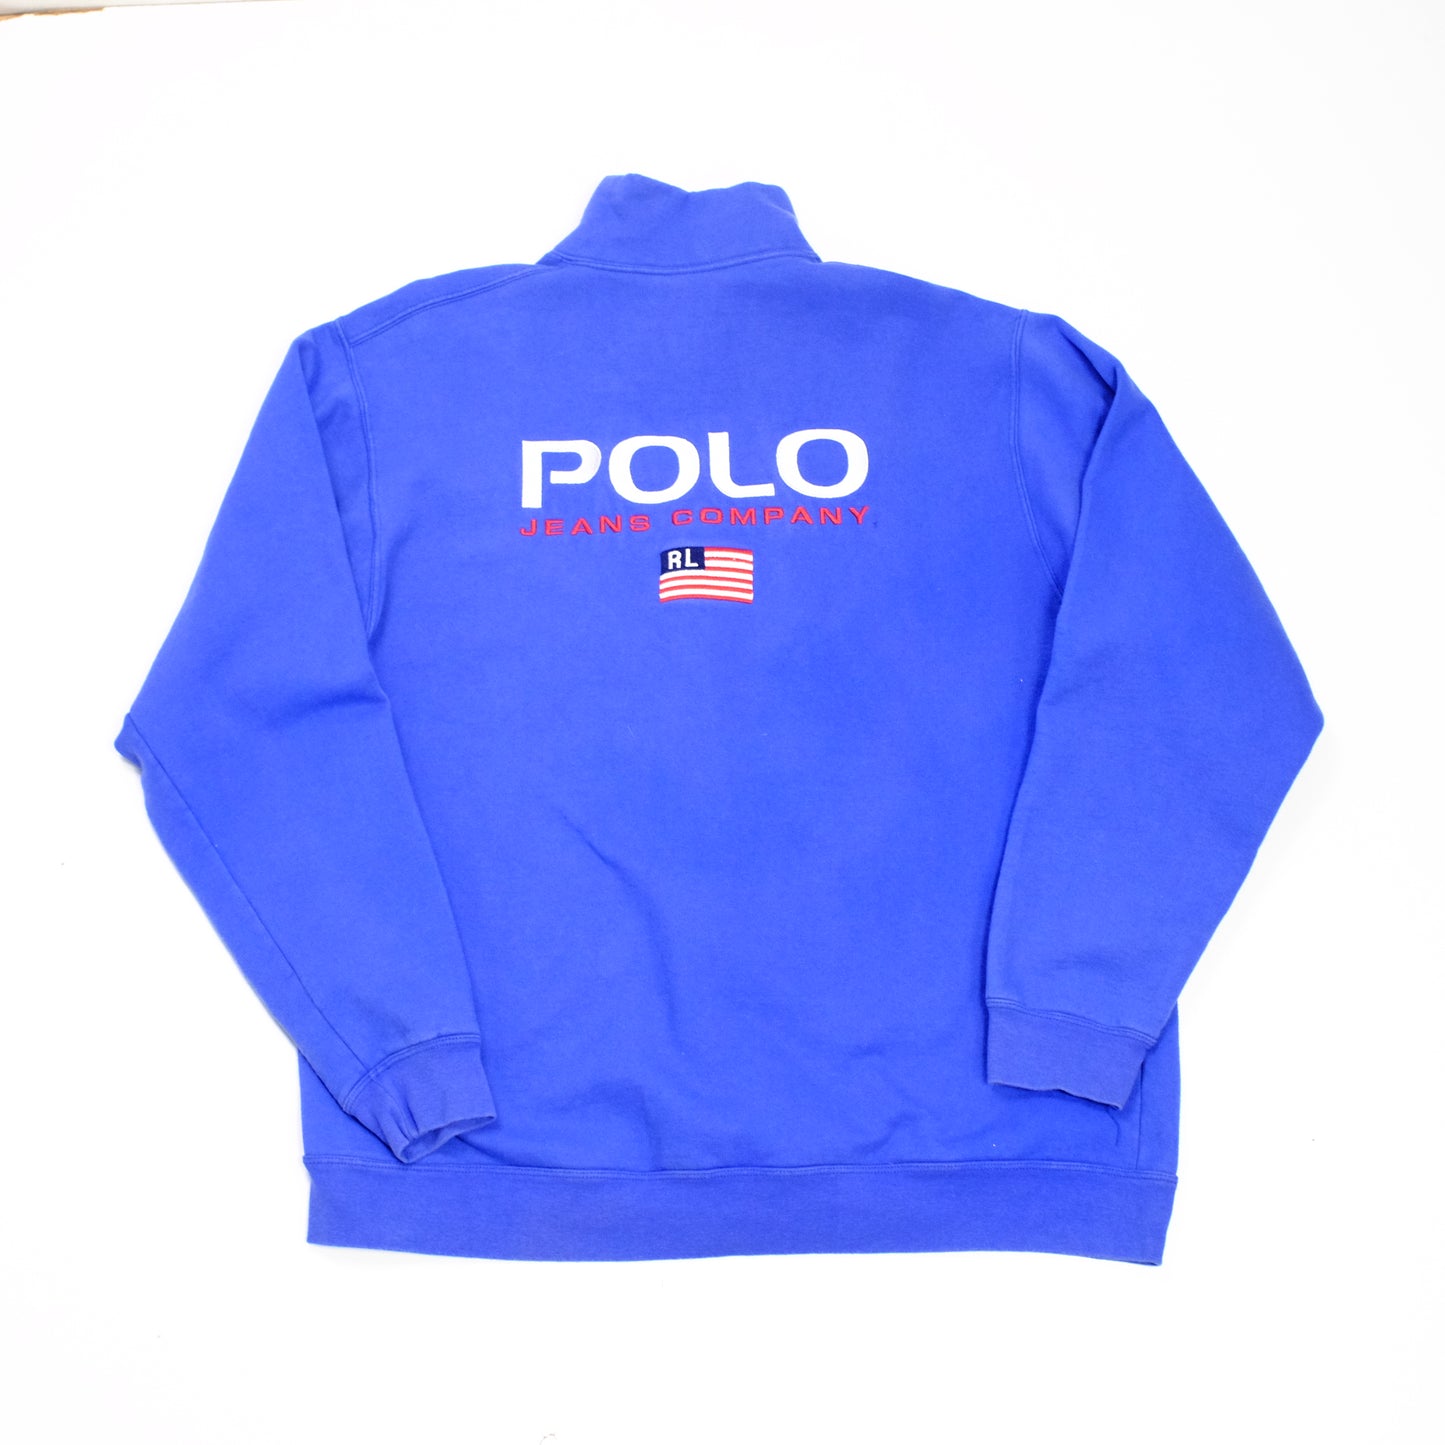 Polo Jeans - XL